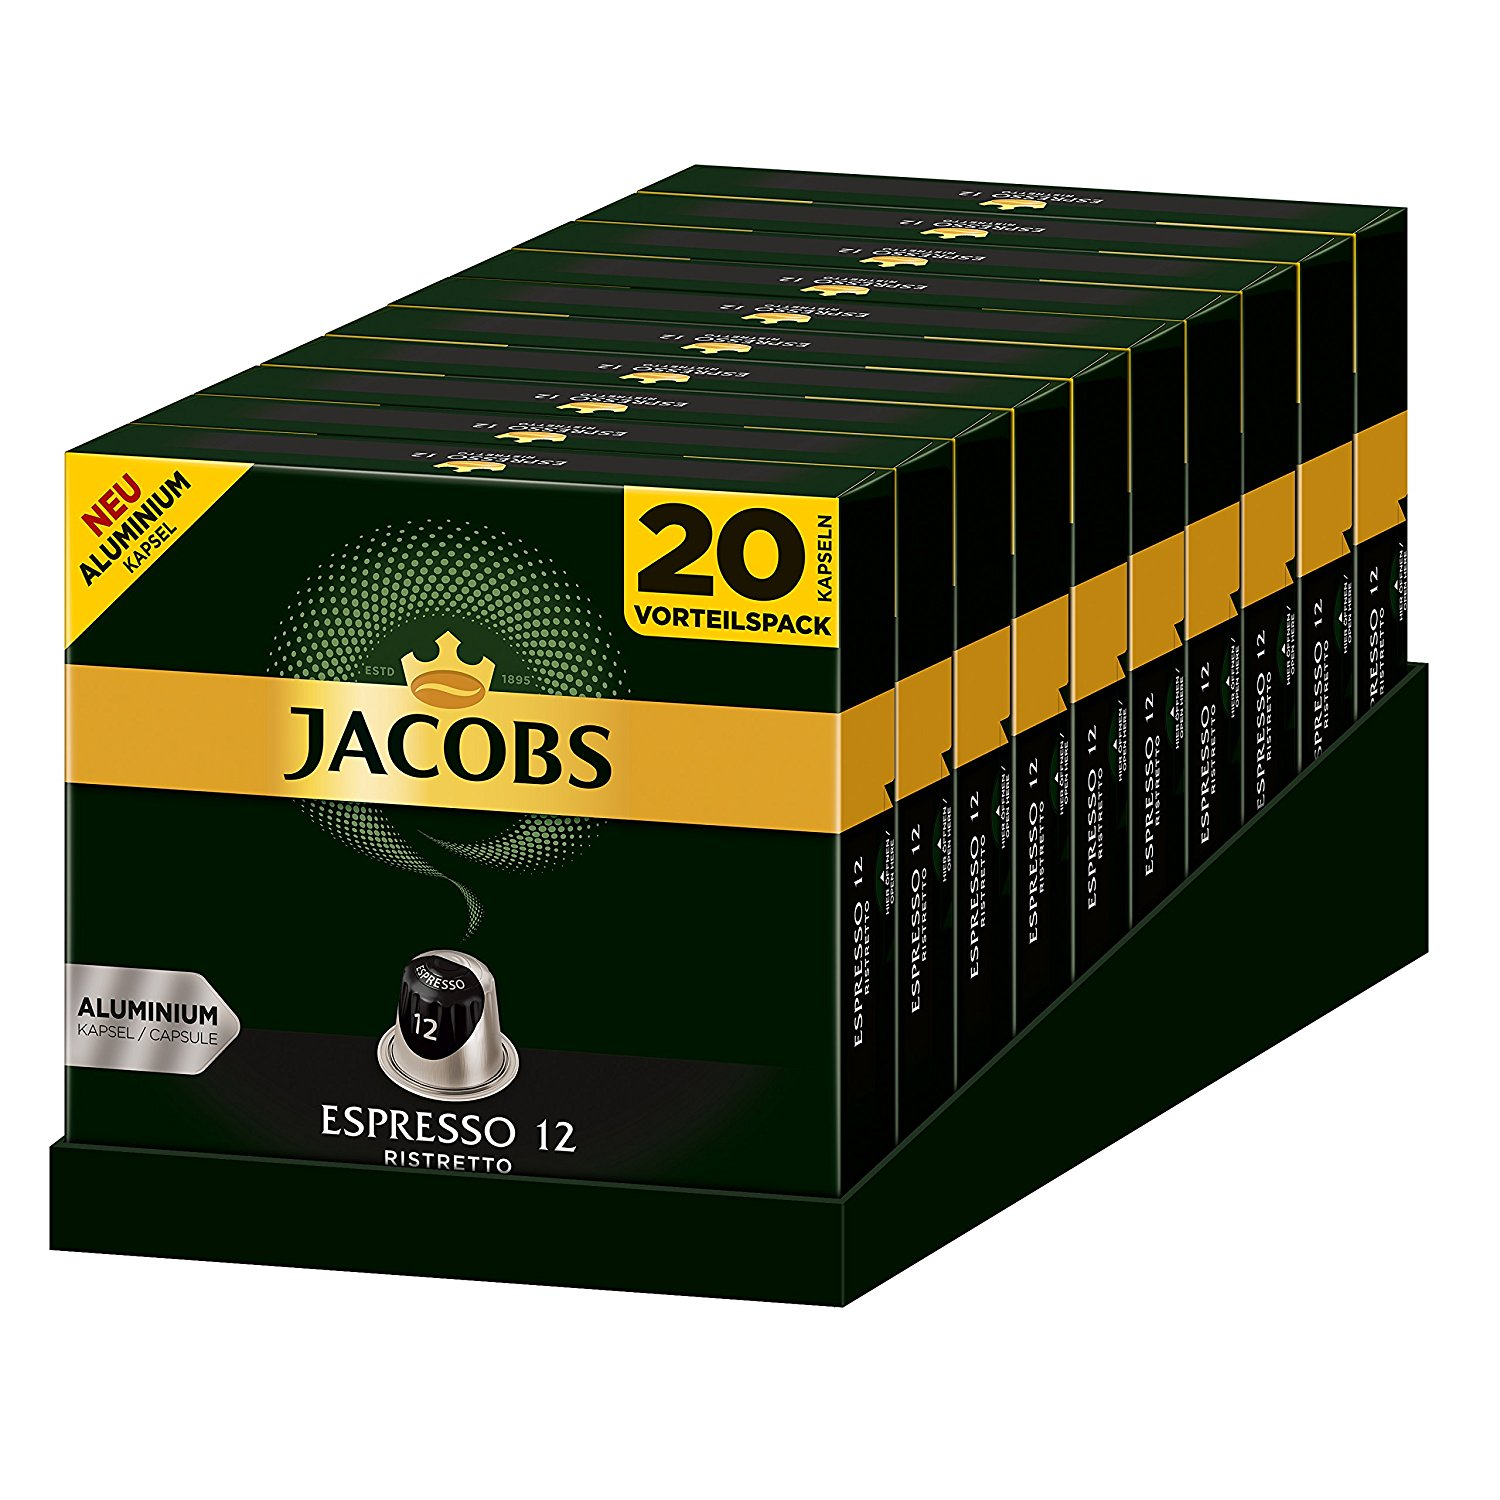 (Nespresso Nespresso®* System) 12 10 Ristretto 20 JACOBS Espresso kompatible Kaffeekapseln x